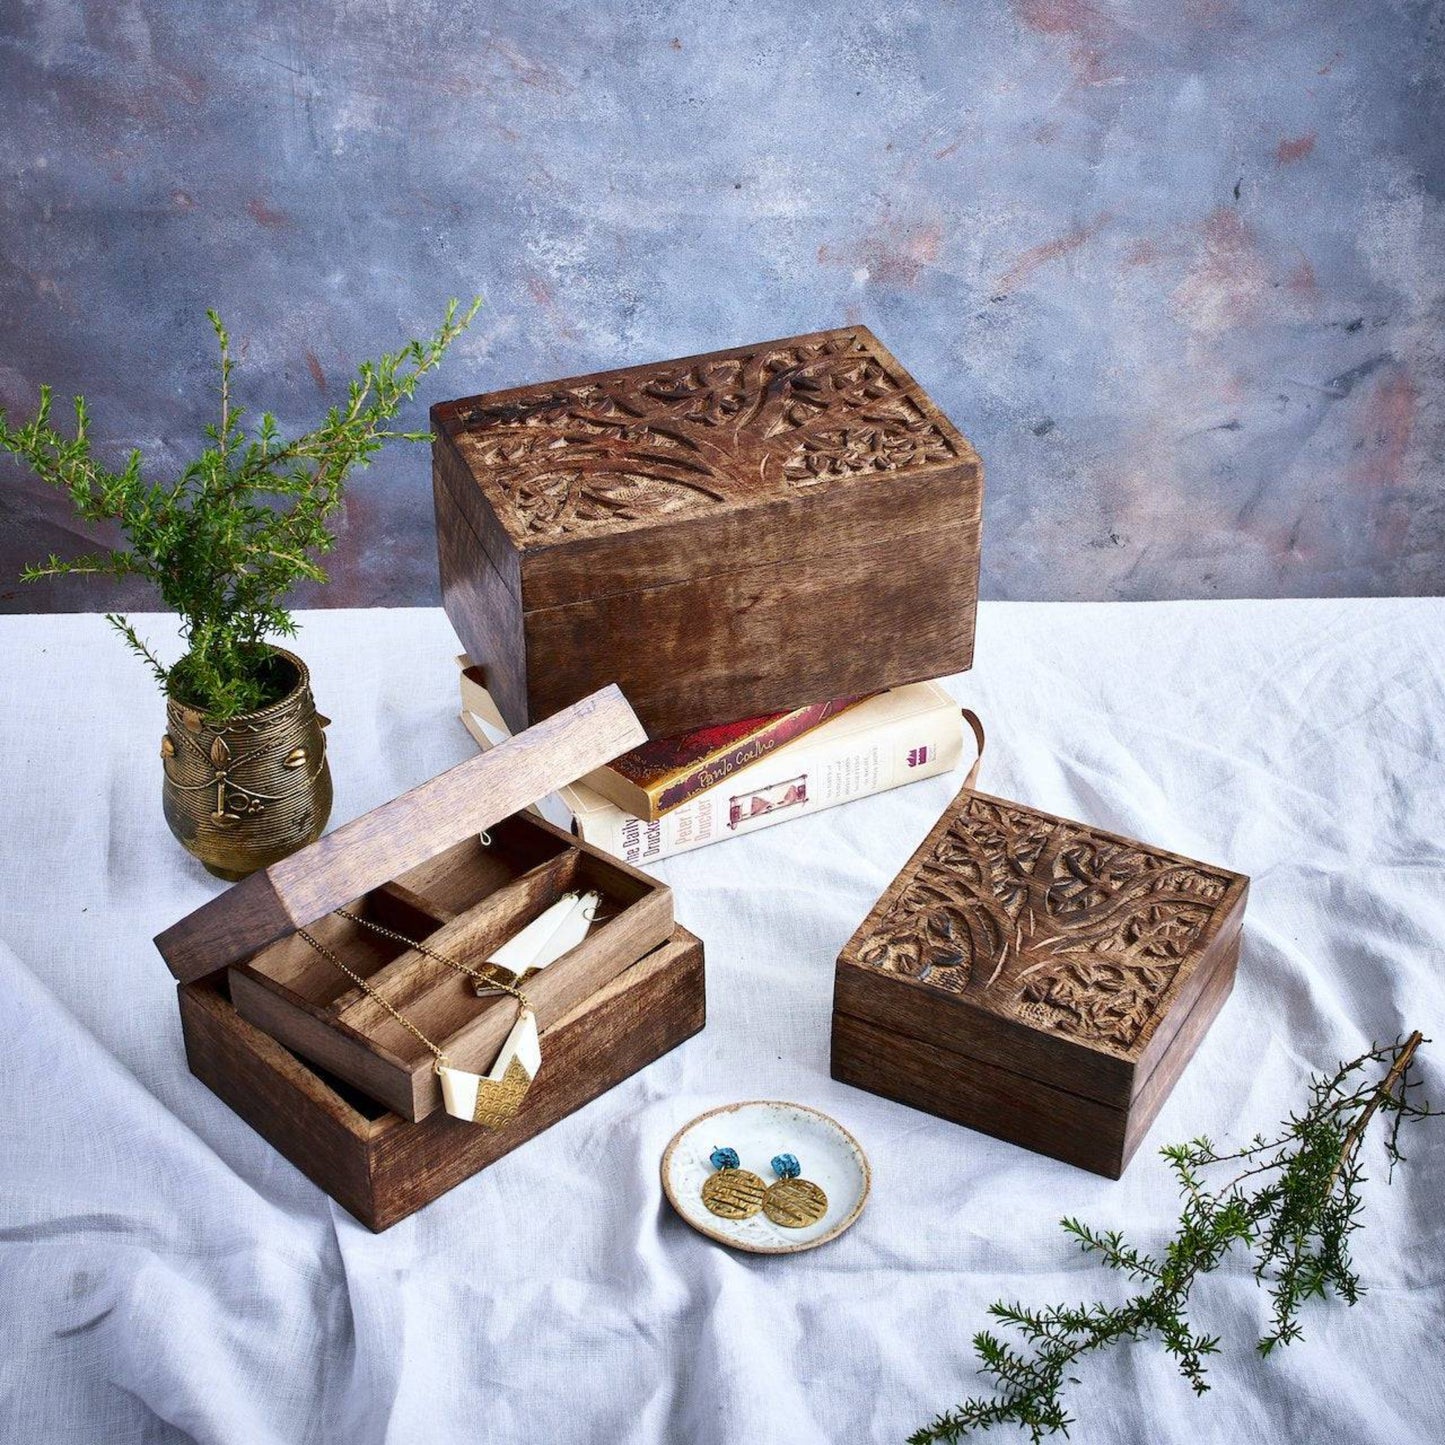 Small Tree of Life Wood Jewellery Box - Square, 5 inch - Aksa